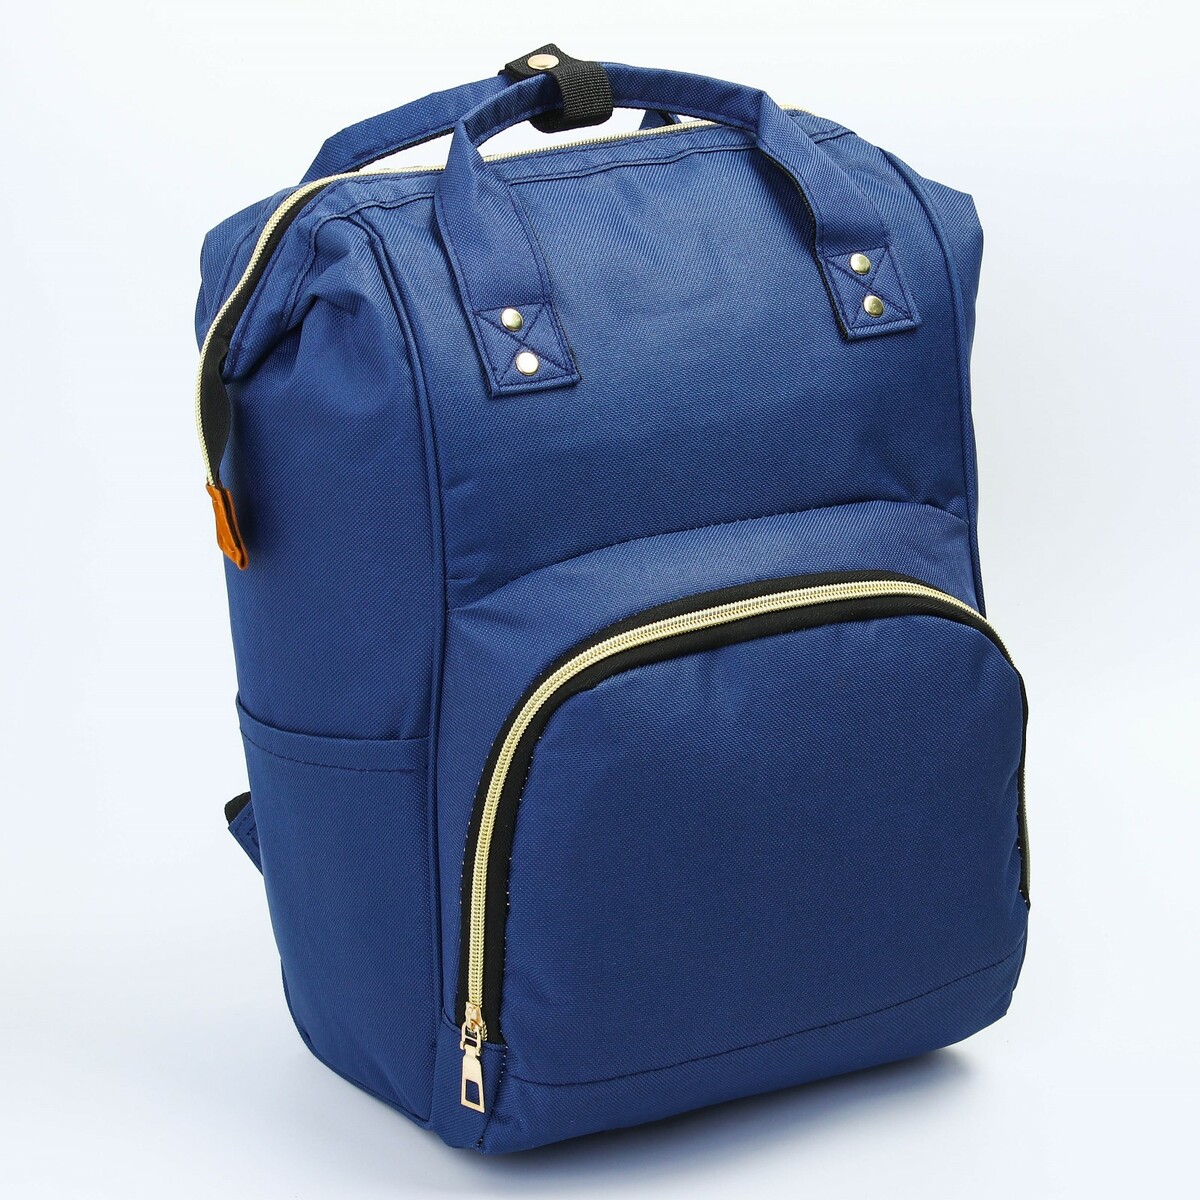 Рюкзак женский с термокарманом, термосумка - портфель, цвет синий рюкзак женский с термокарманом термосумка портфель синий